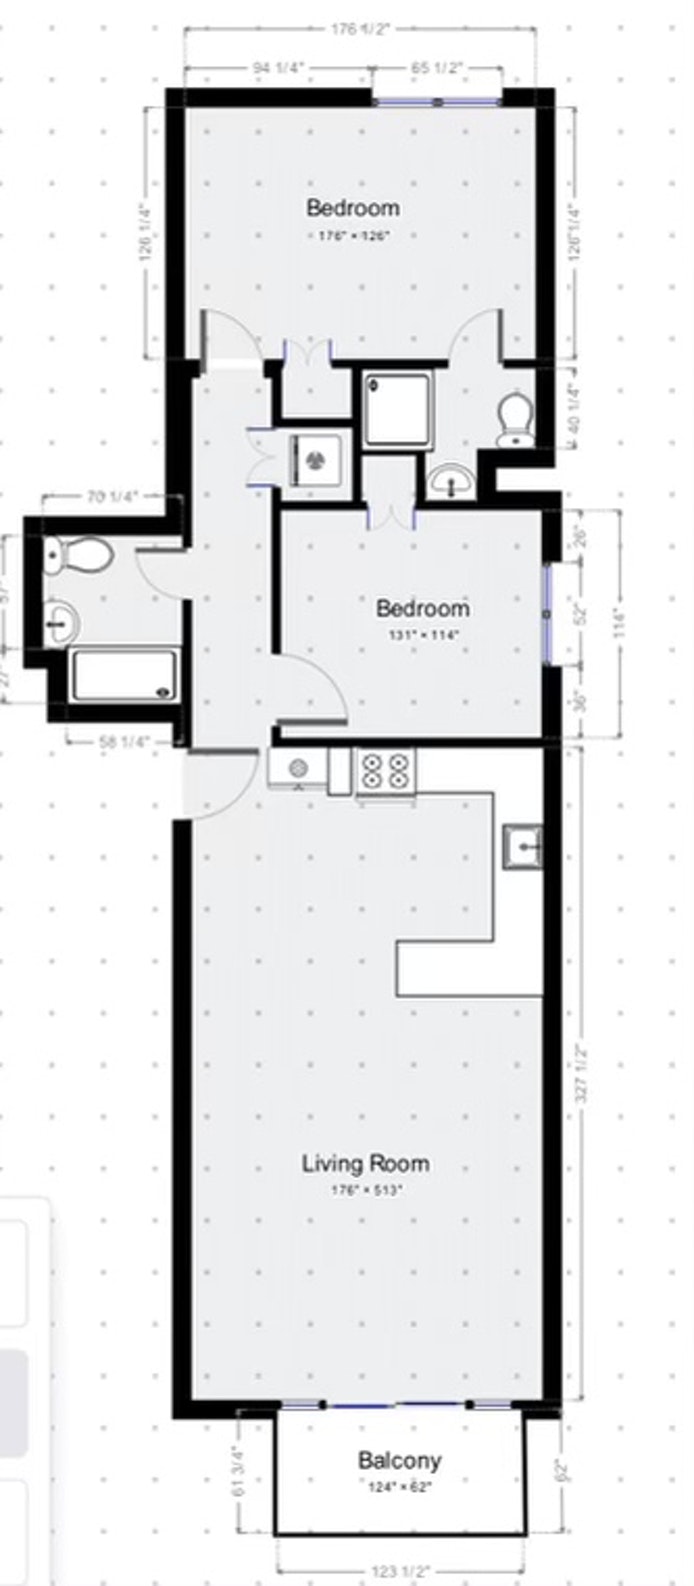 Floorplan for 560 19th Street, 2B